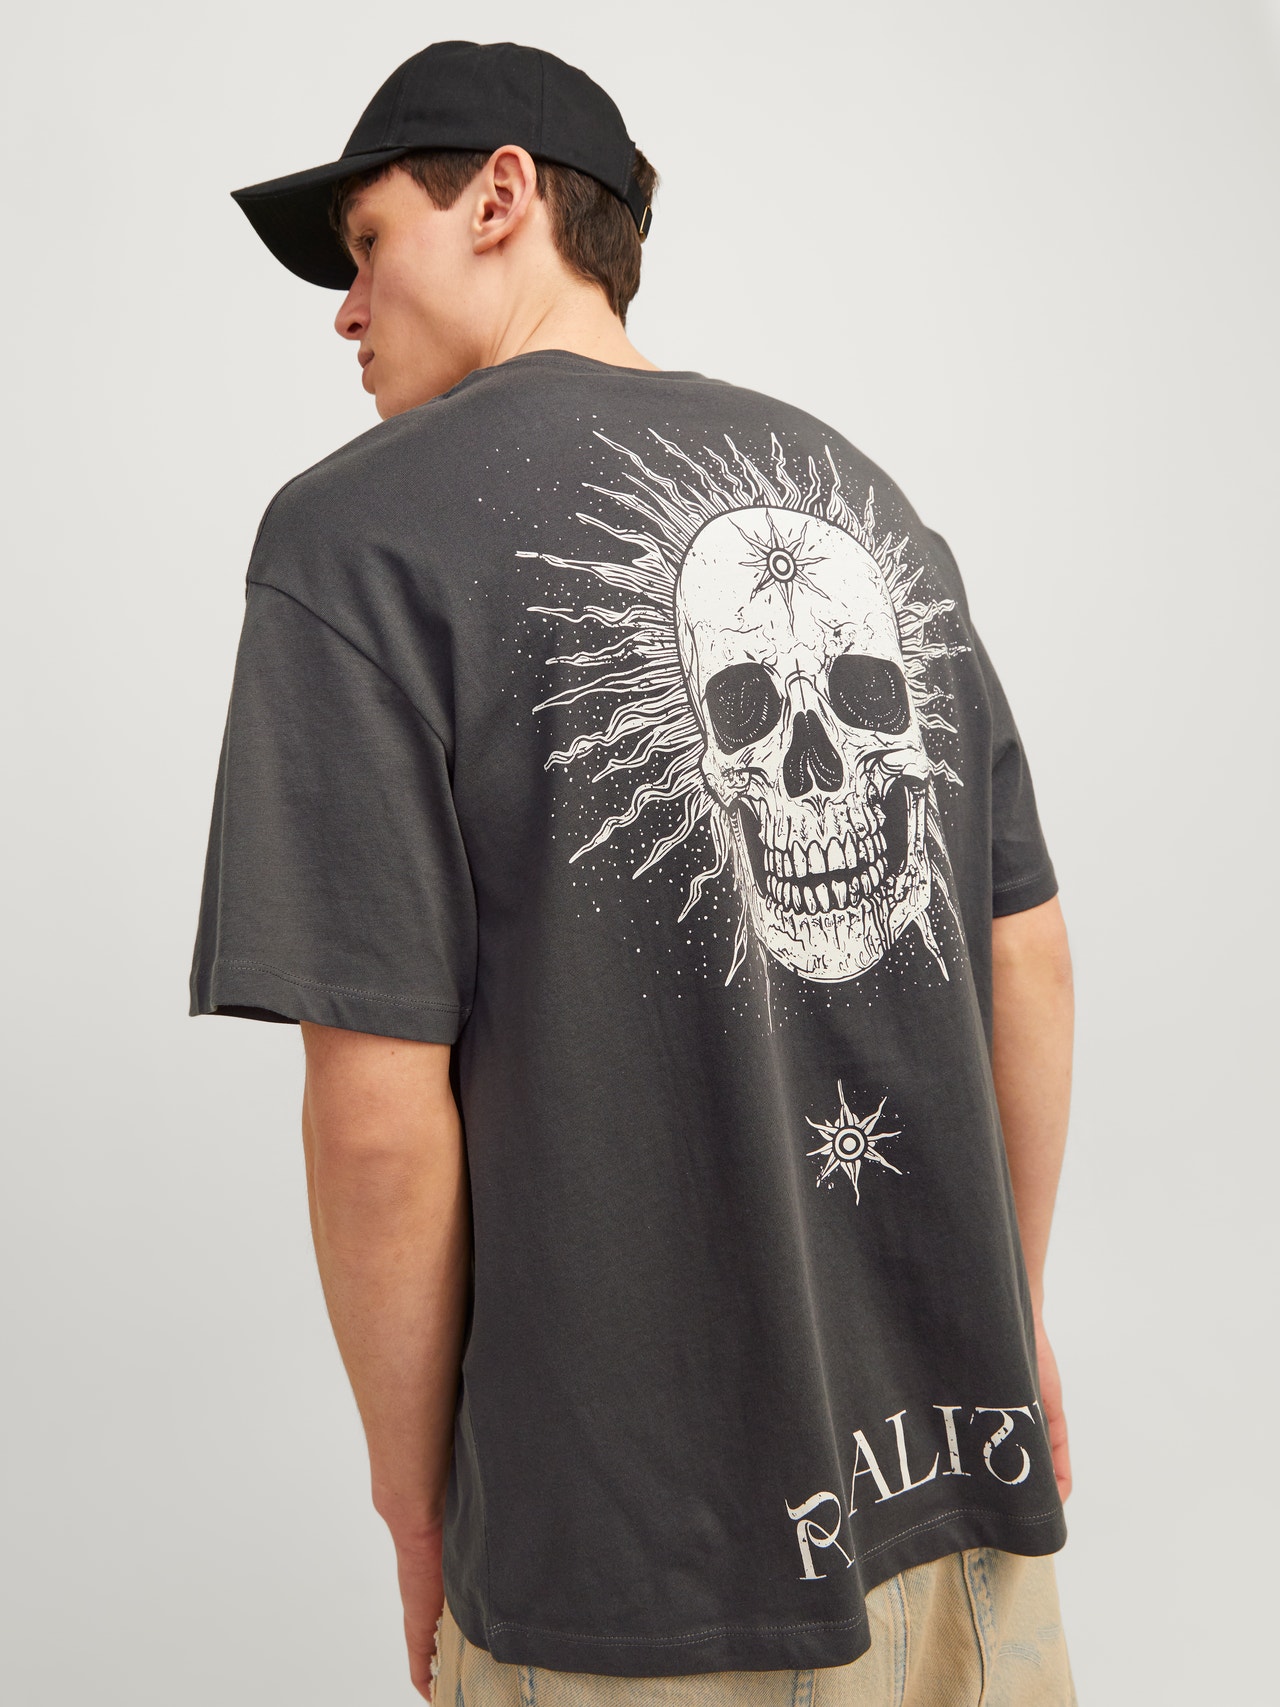 Jack & Jones Printed Crew neck T-shirt -Asphalt - 12267282